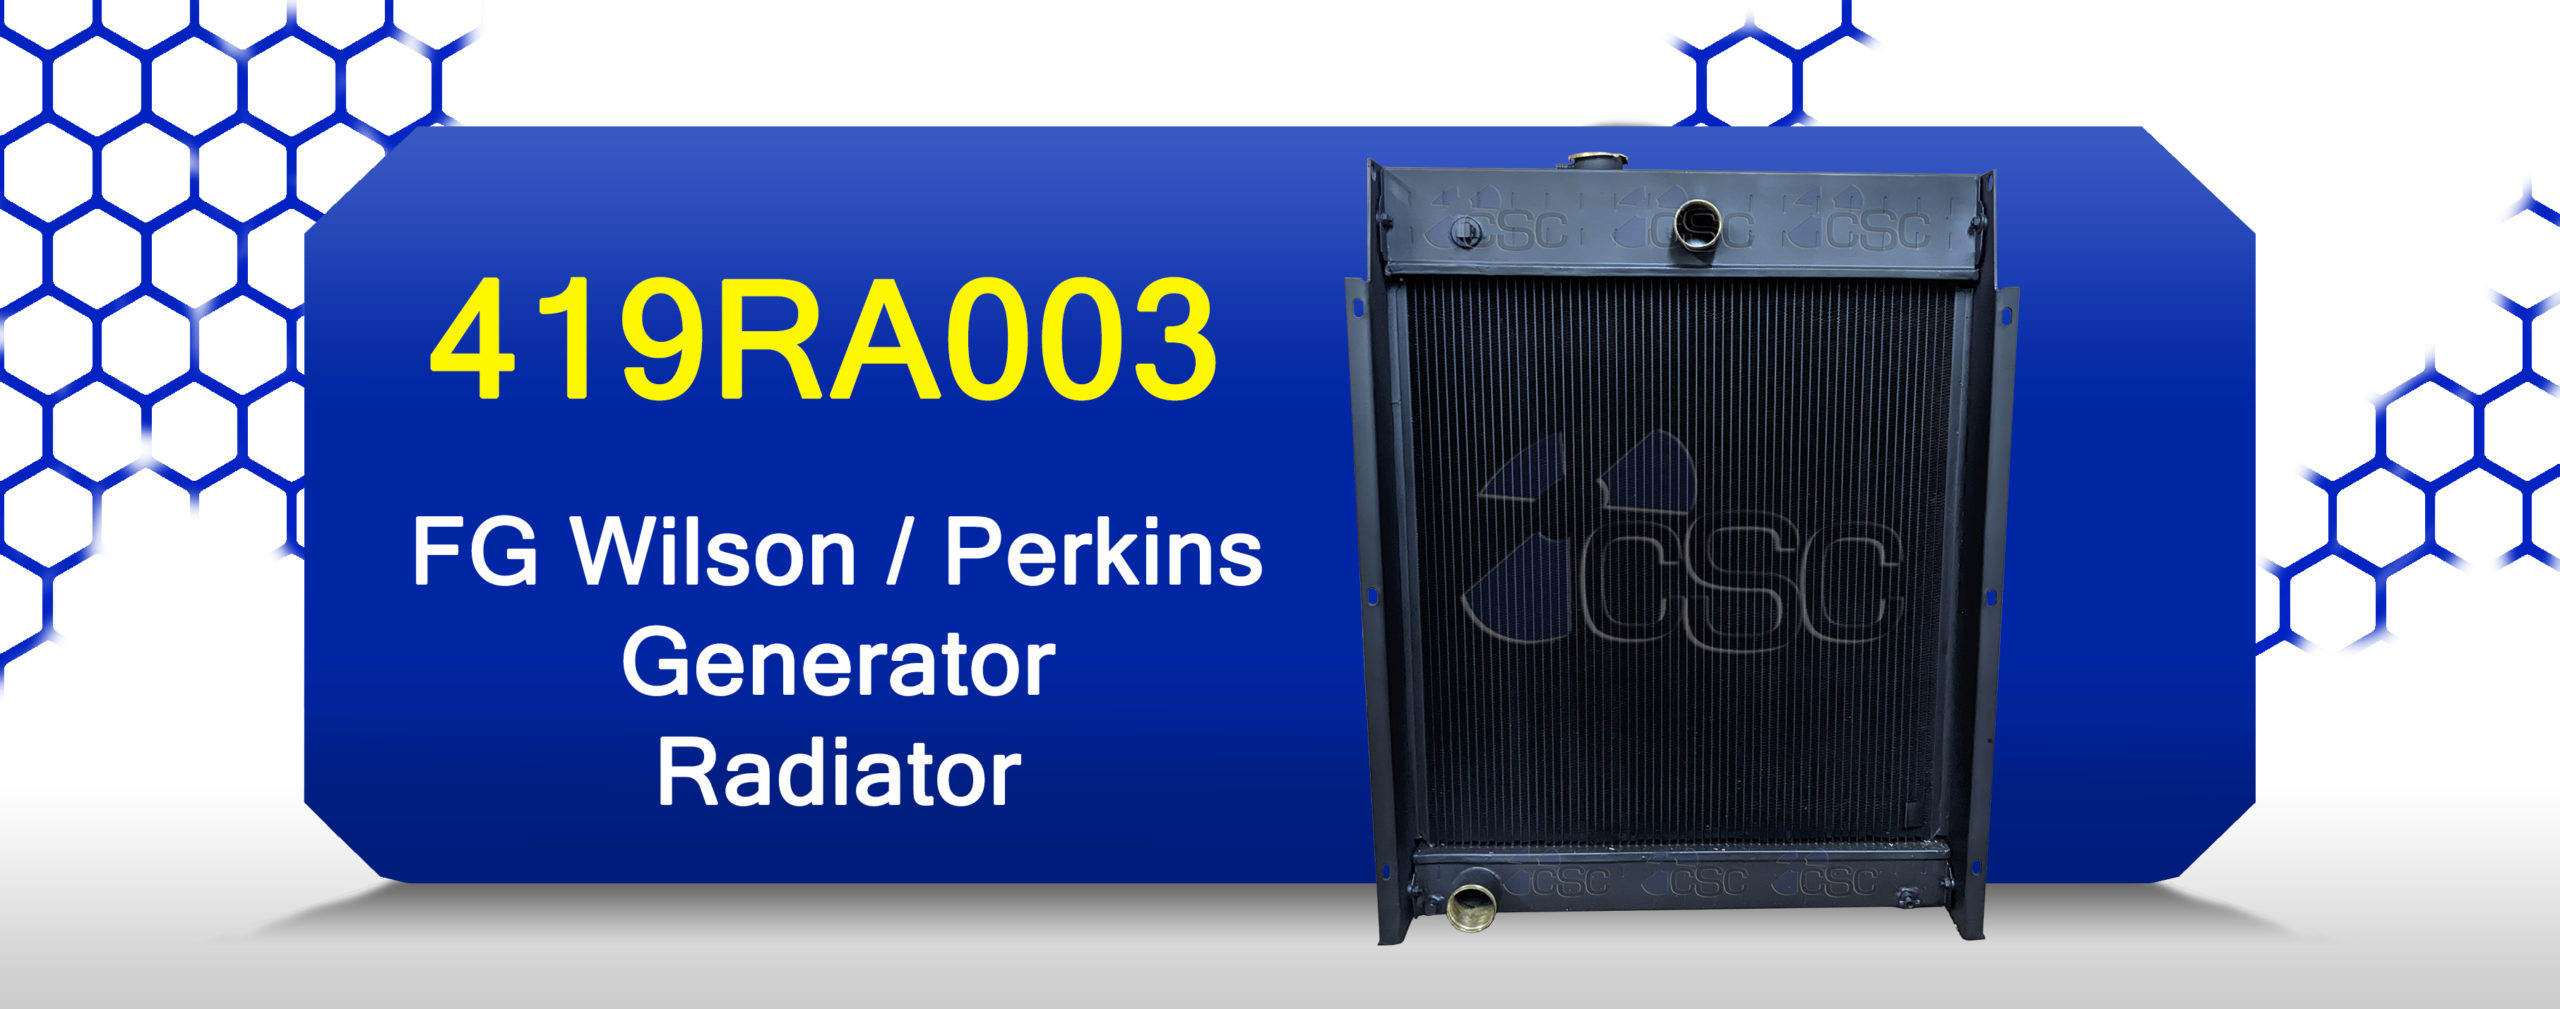 CSC introduces the 419RA003 for FG Wilson / Perkins generators